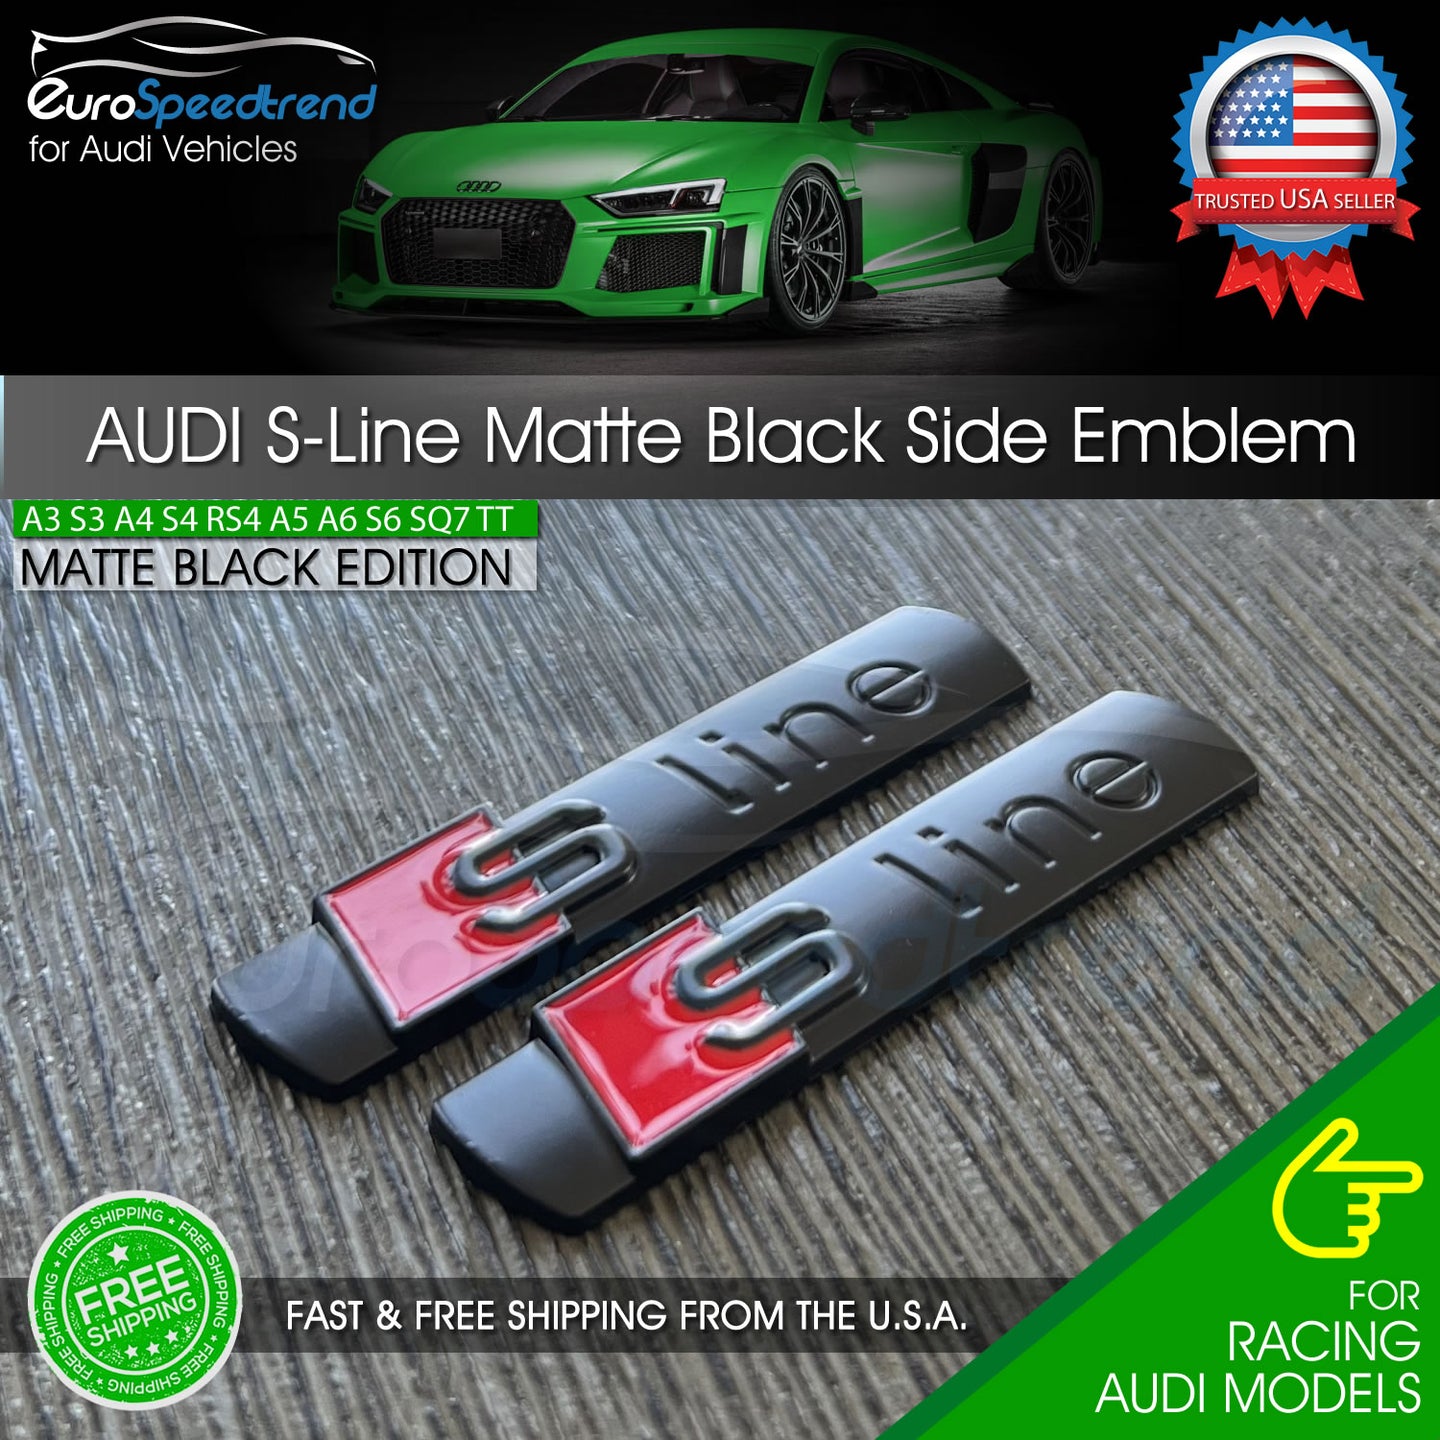 2x Audi S-Line Matte Black Badge Emblem 3D A3 A4 A5 A6 A7 Q5 TT Side Fender OE